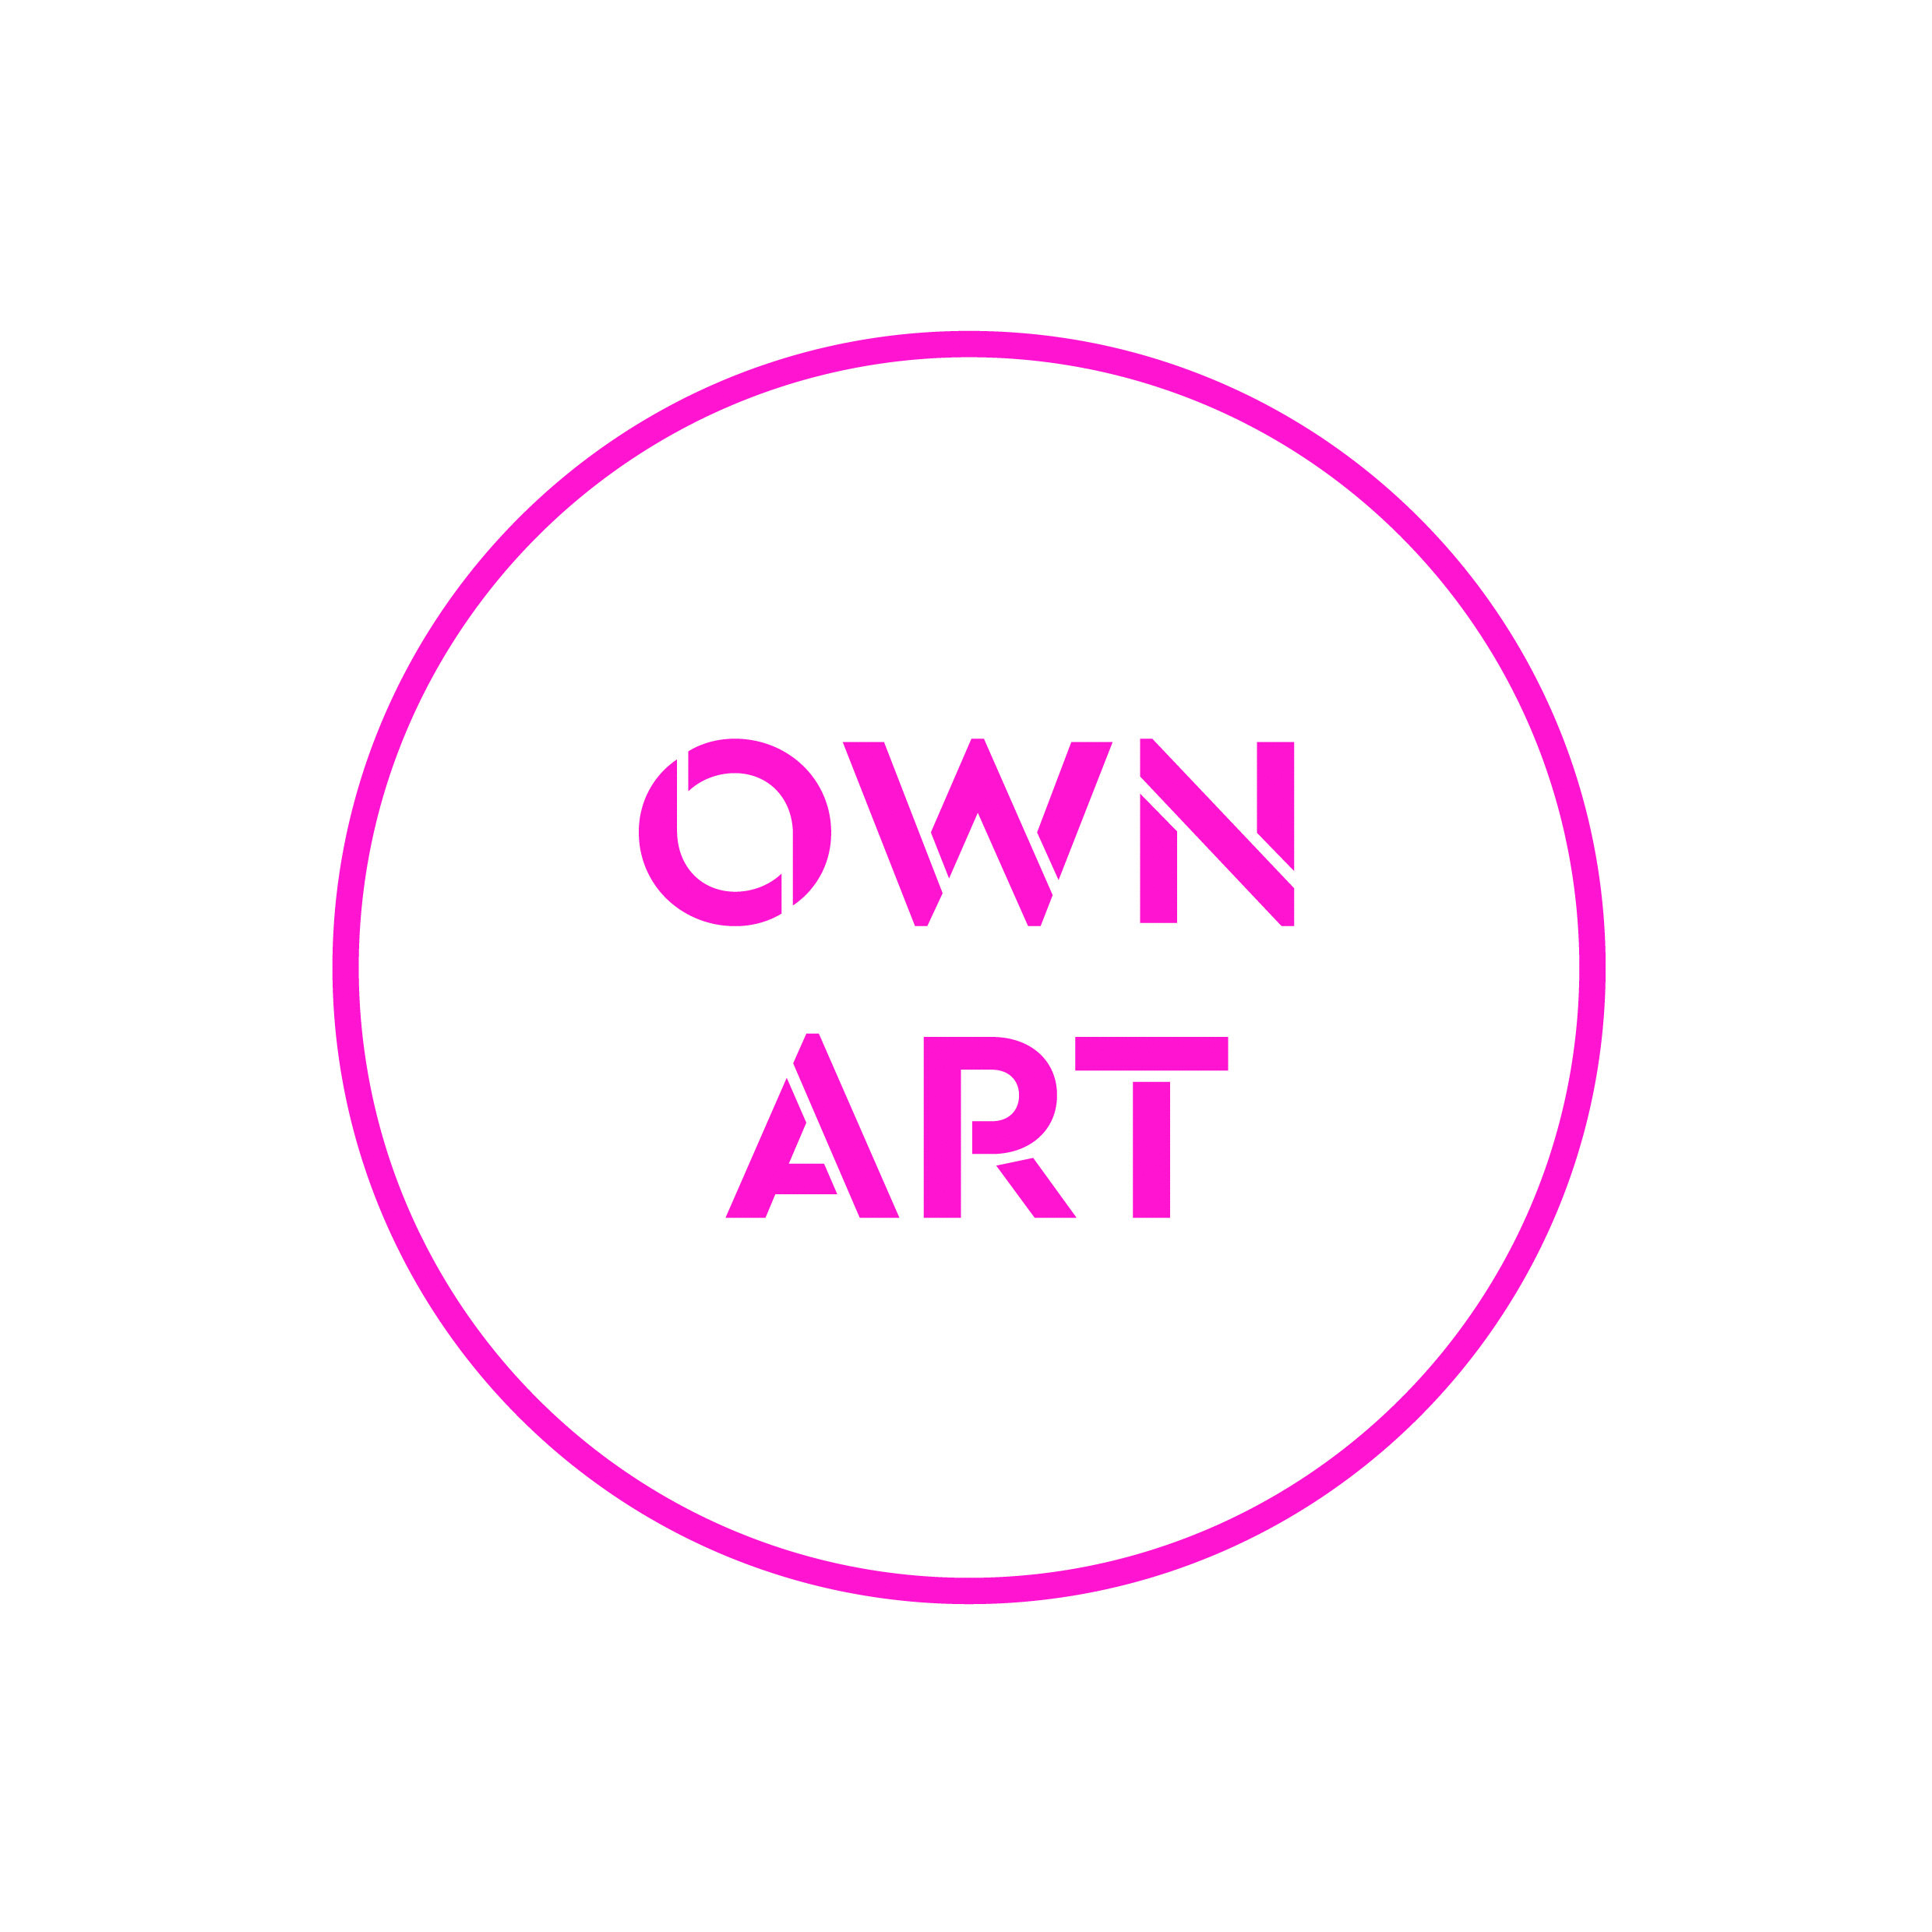 Own_Art_master_logotypes_all_CMYK_pink